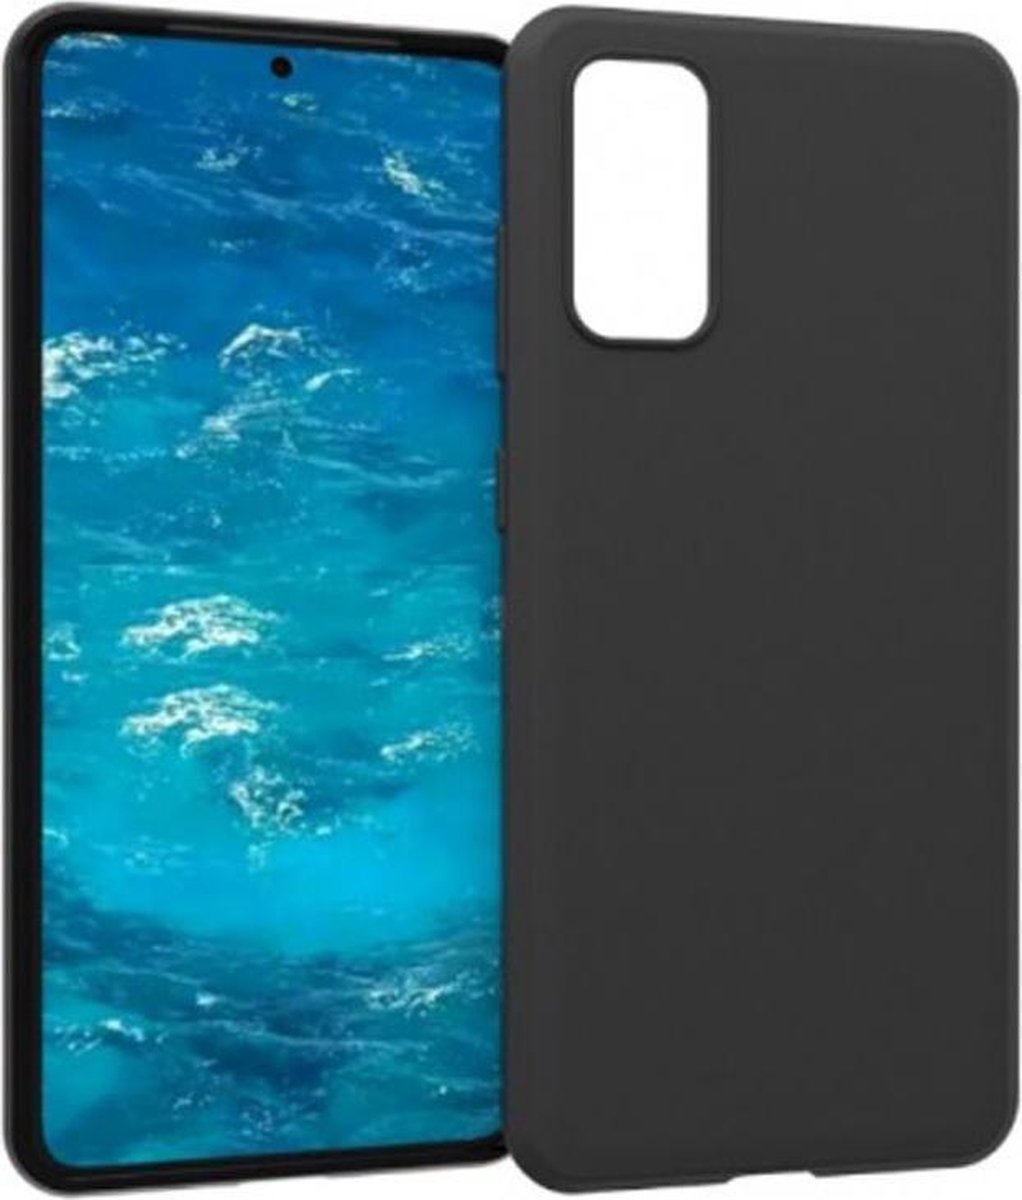 GSM-Basix TPU Back Cover voor Samsung Galaxy S20 Ultra Zwart